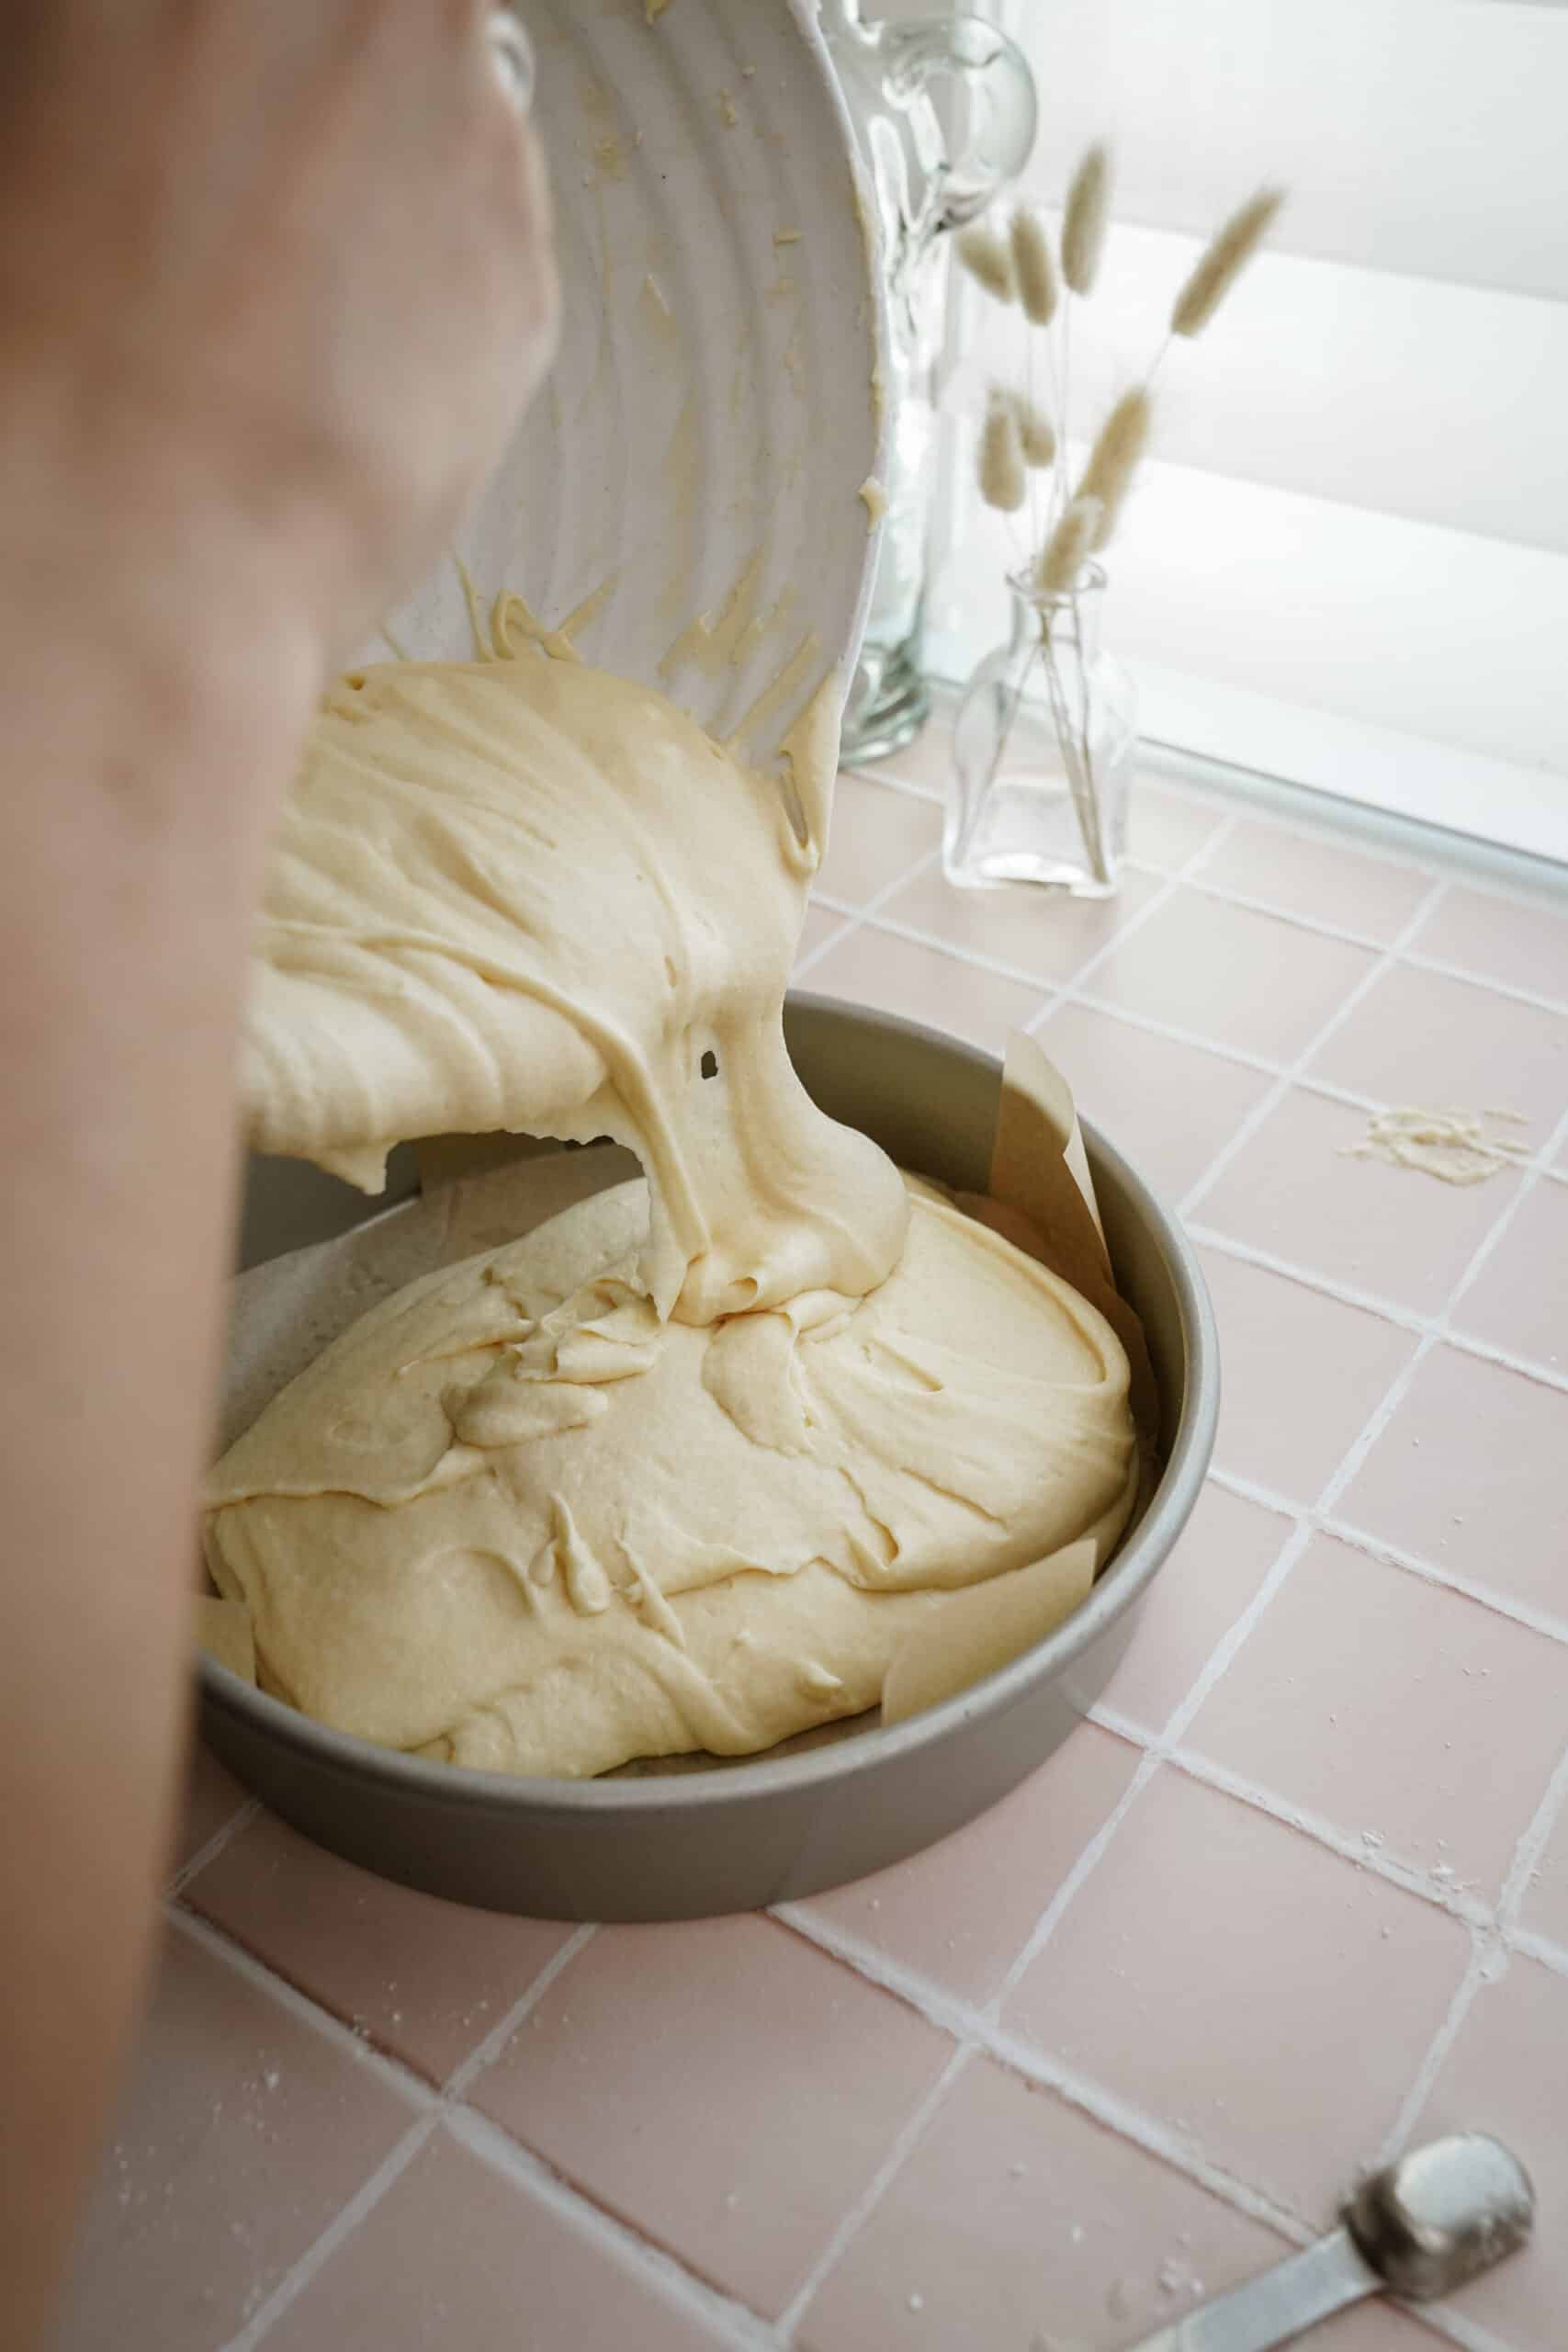 Vanilla cake batter being added to a cake pan